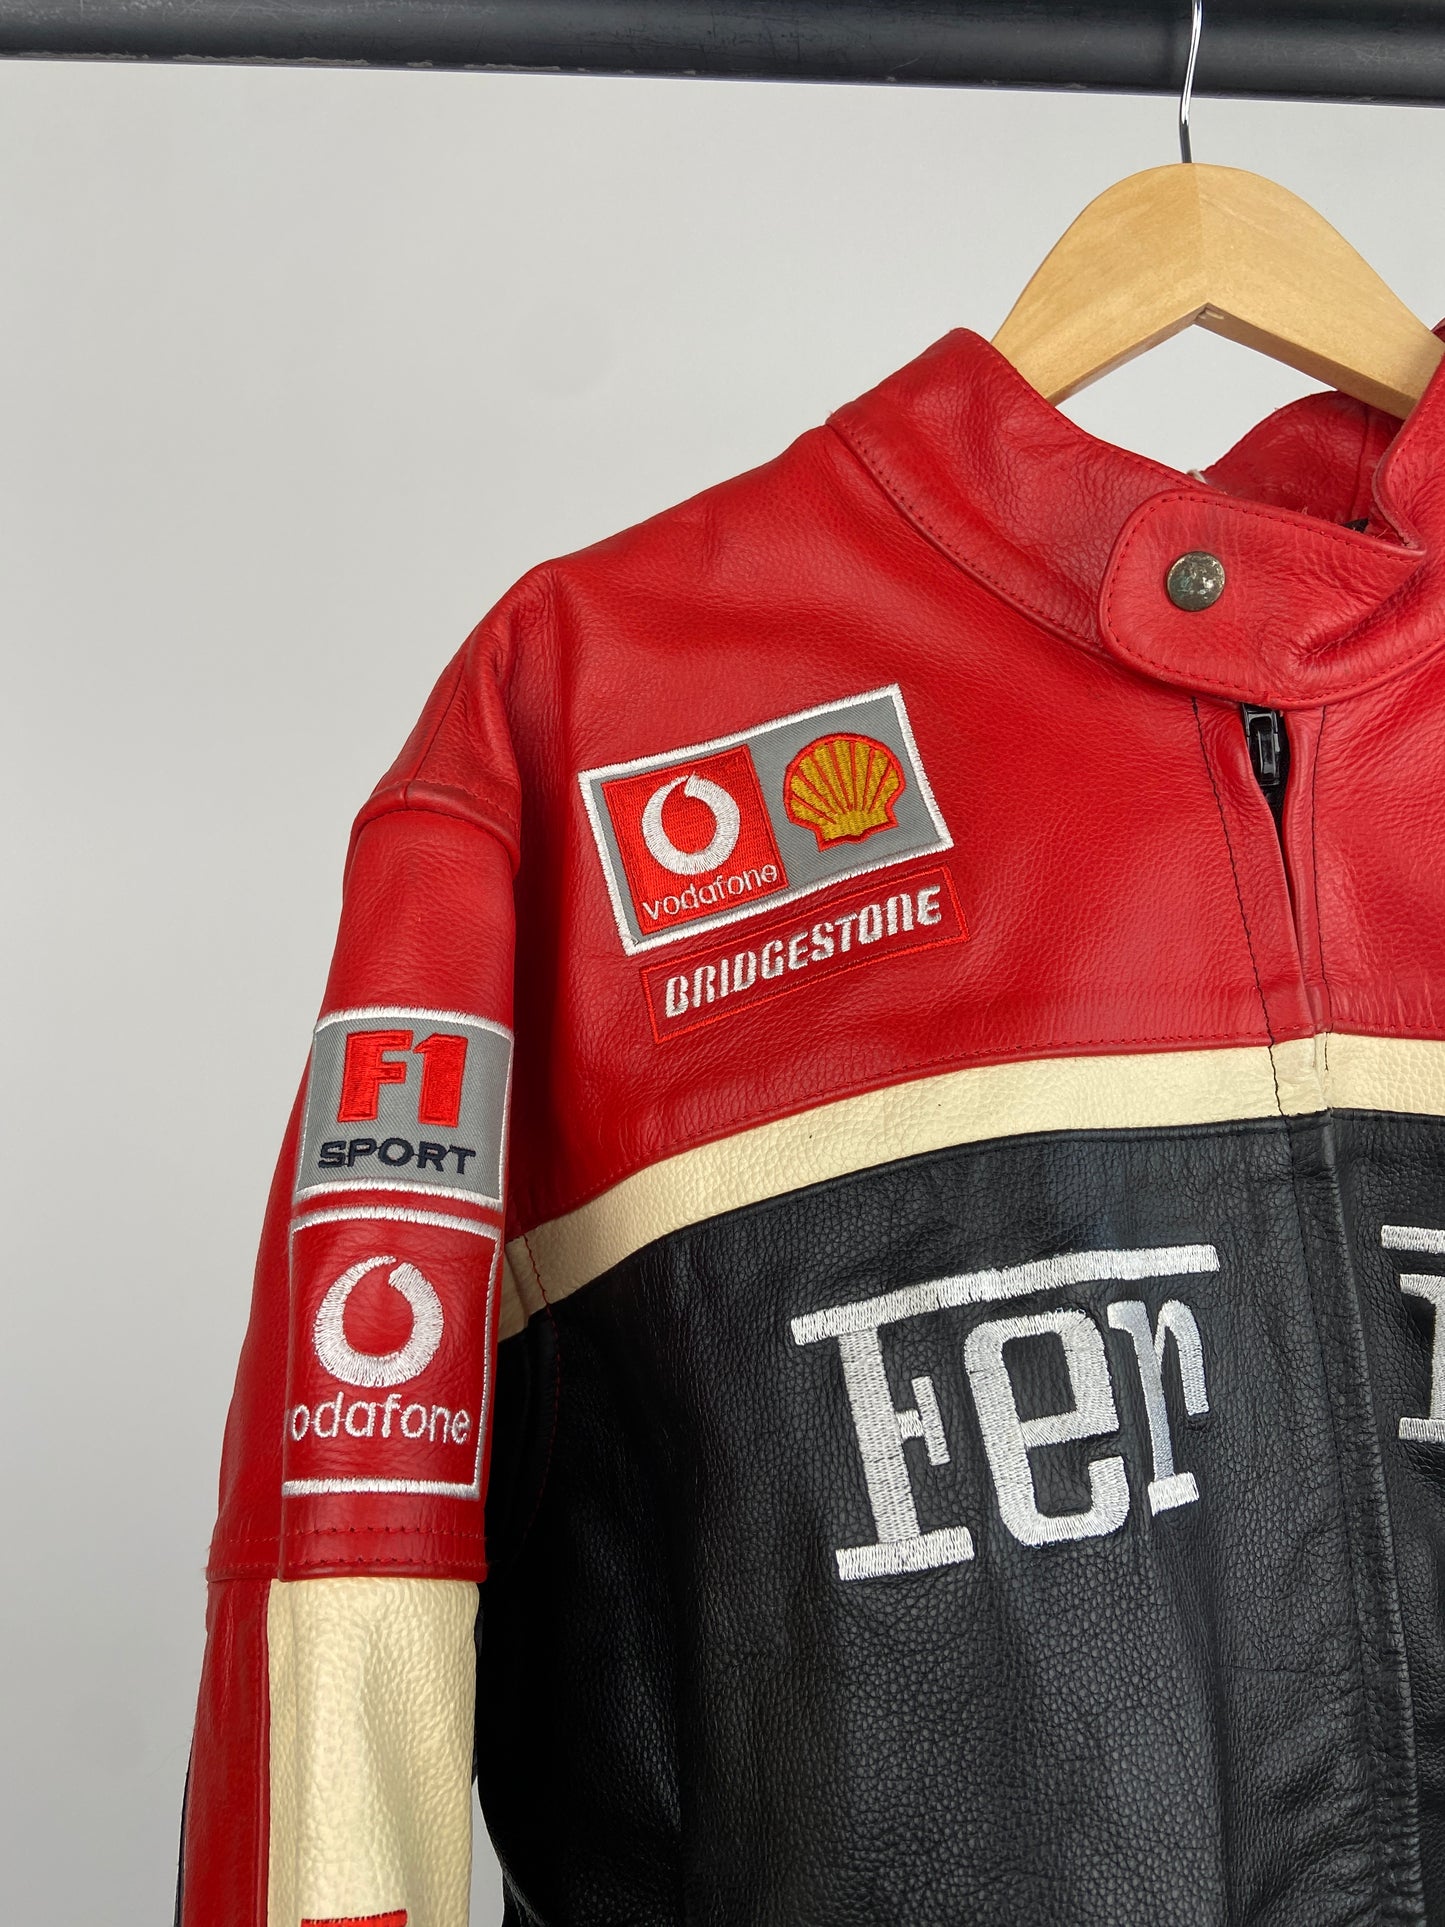 Ferrari Michael Schumacher 90s Leather Motorbike Jacket